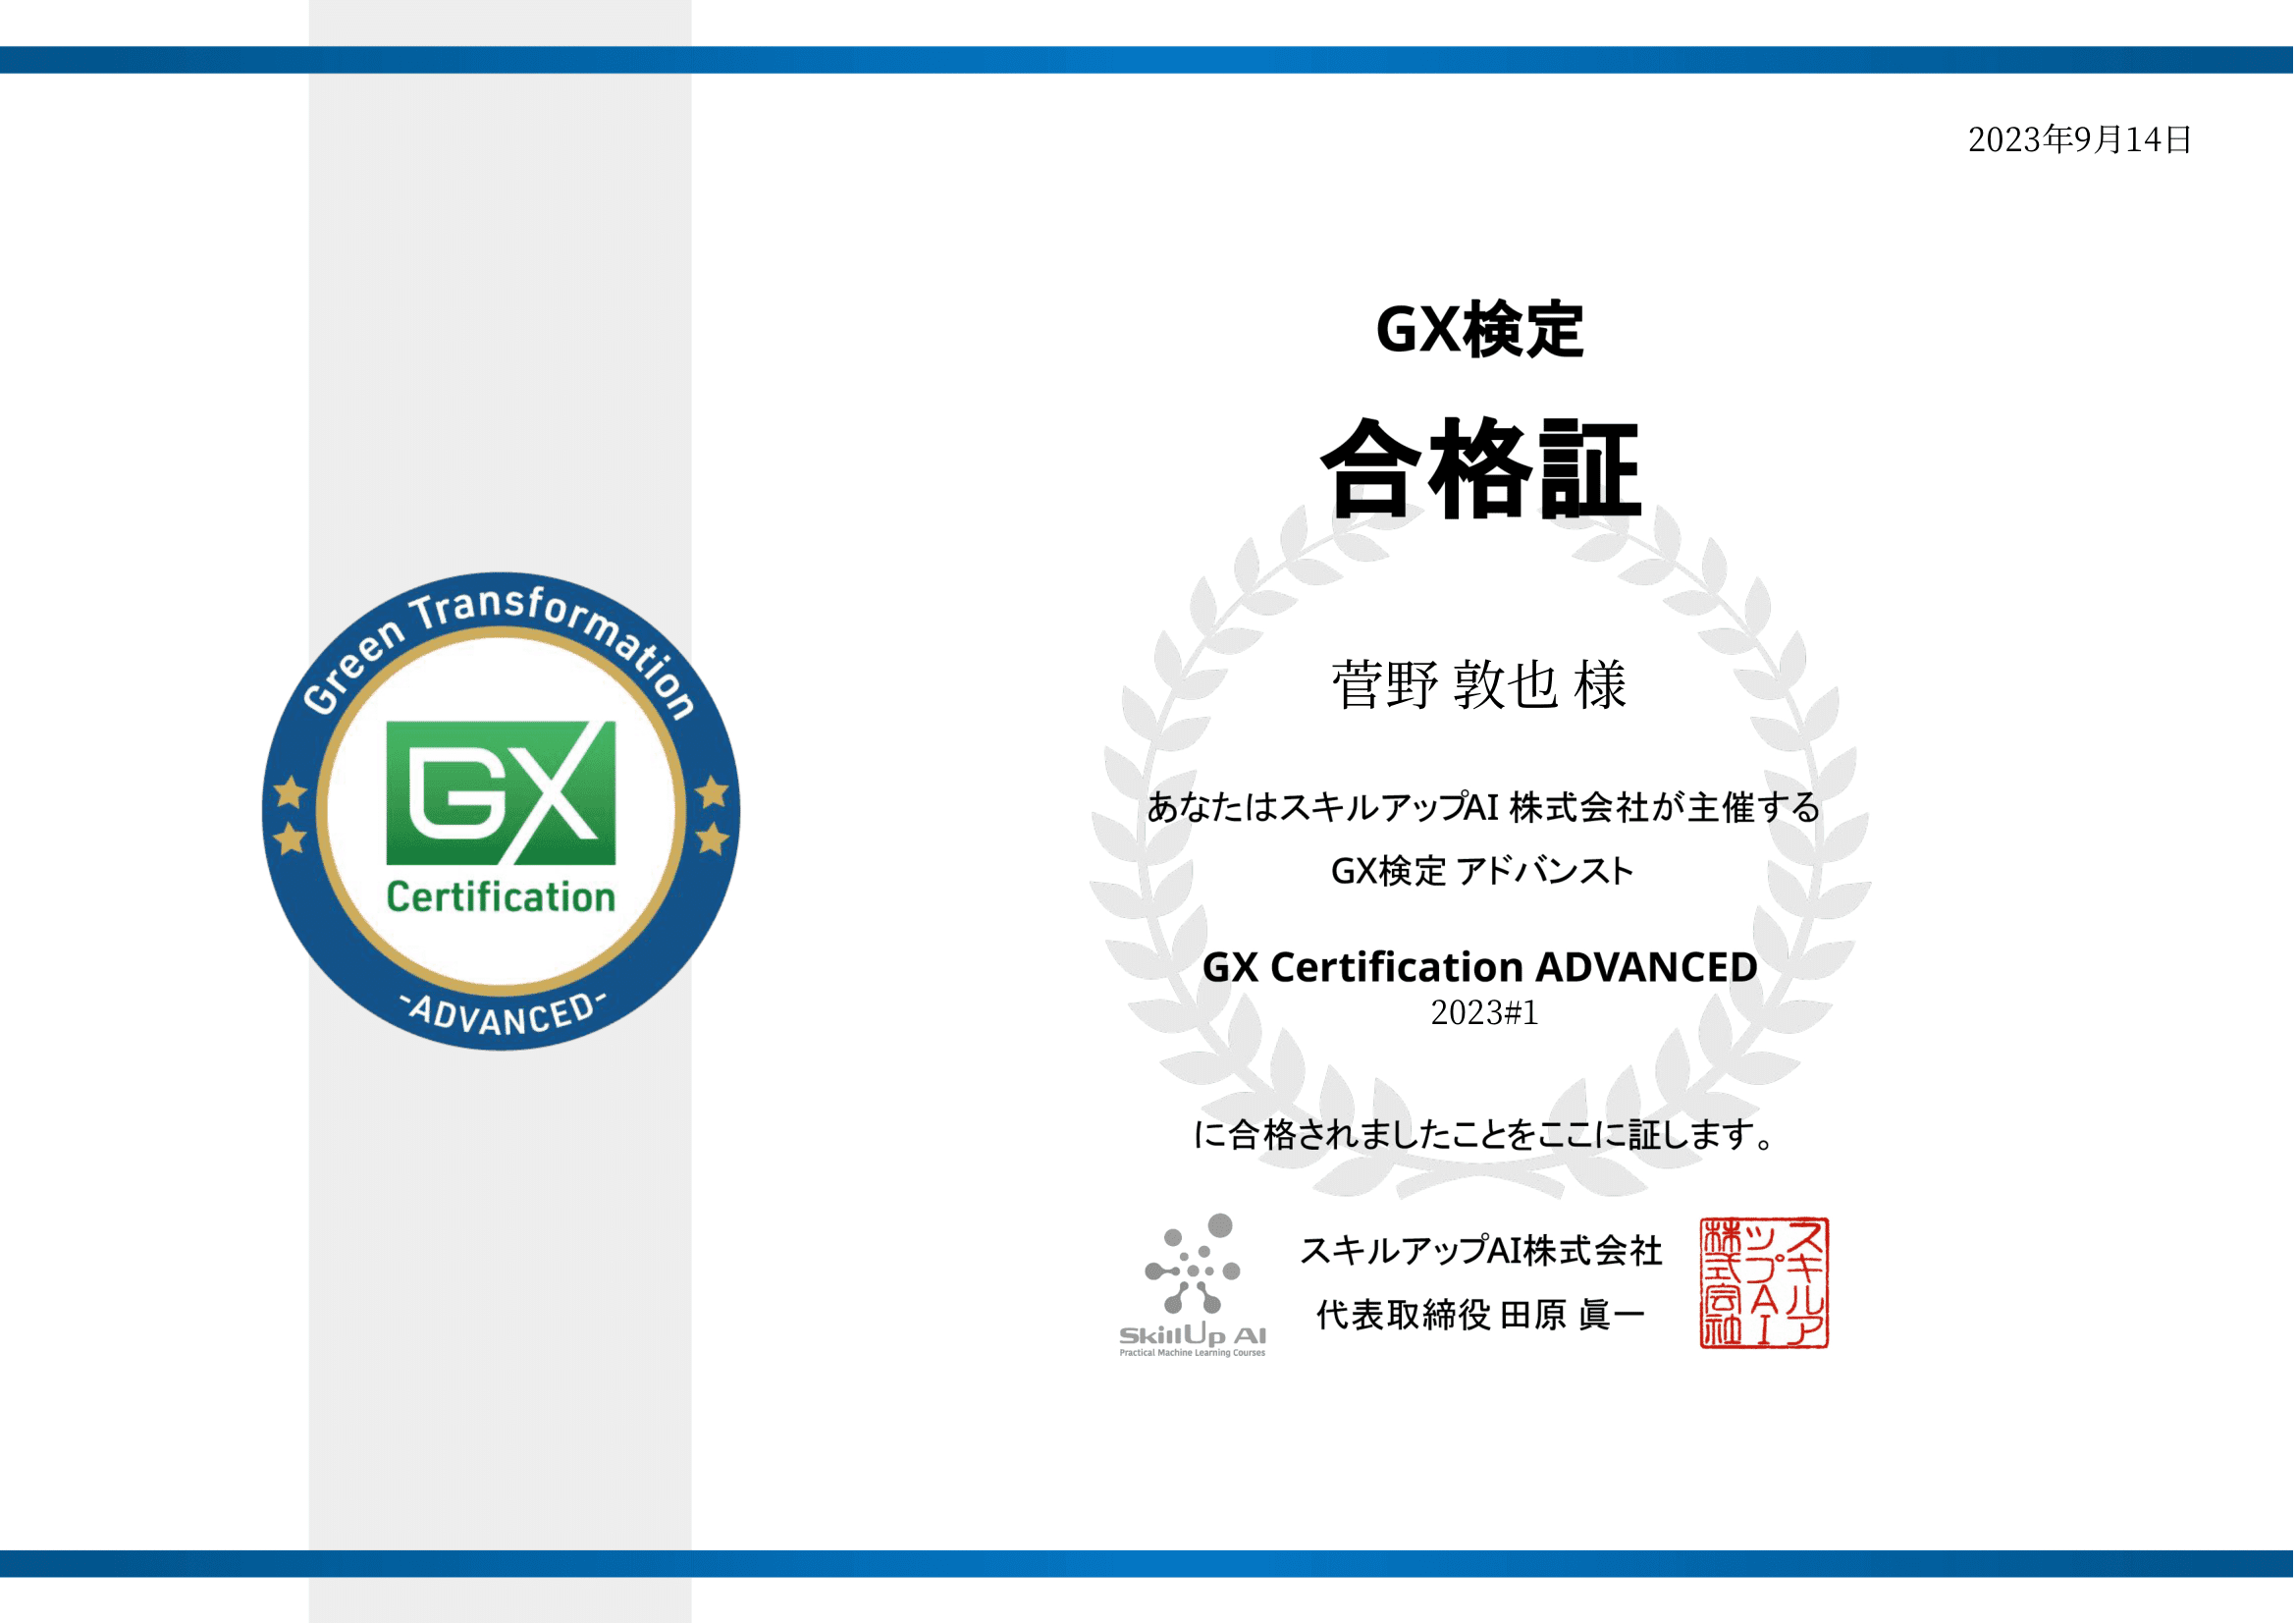 GX Certification ADVANCED 2023#1